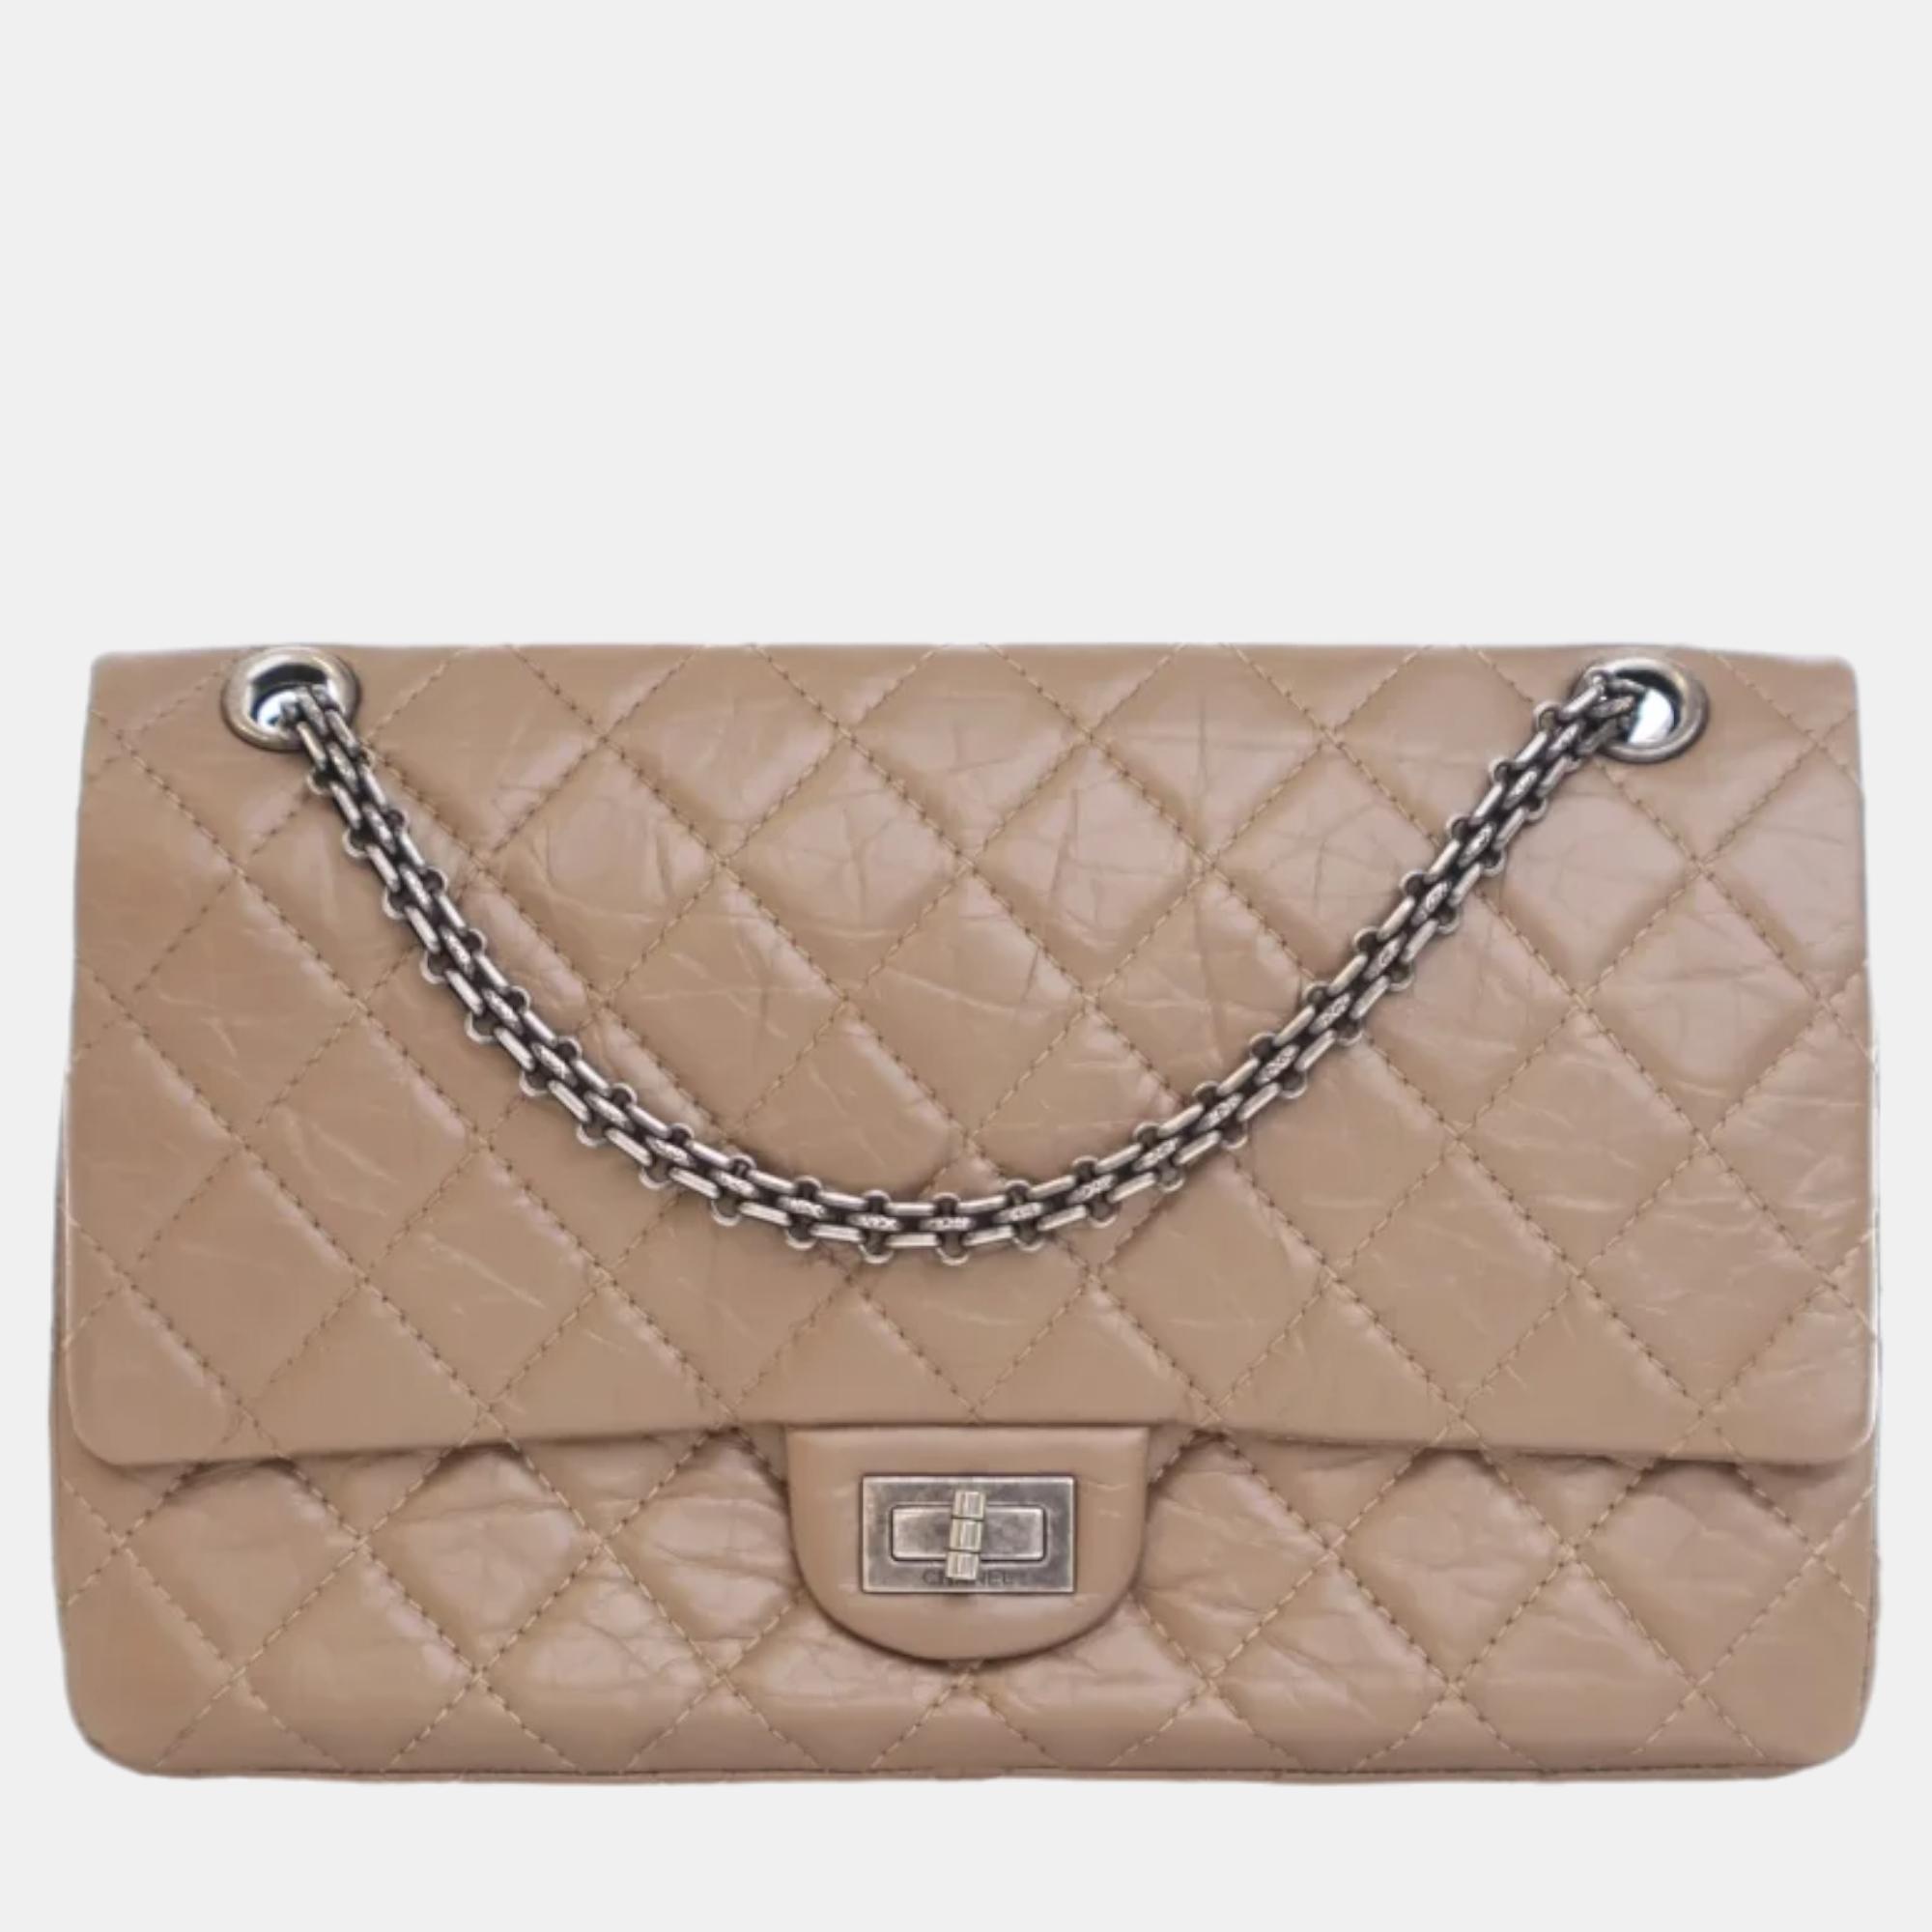 Chanel beige leather 226 reissue double flap shoulder bag